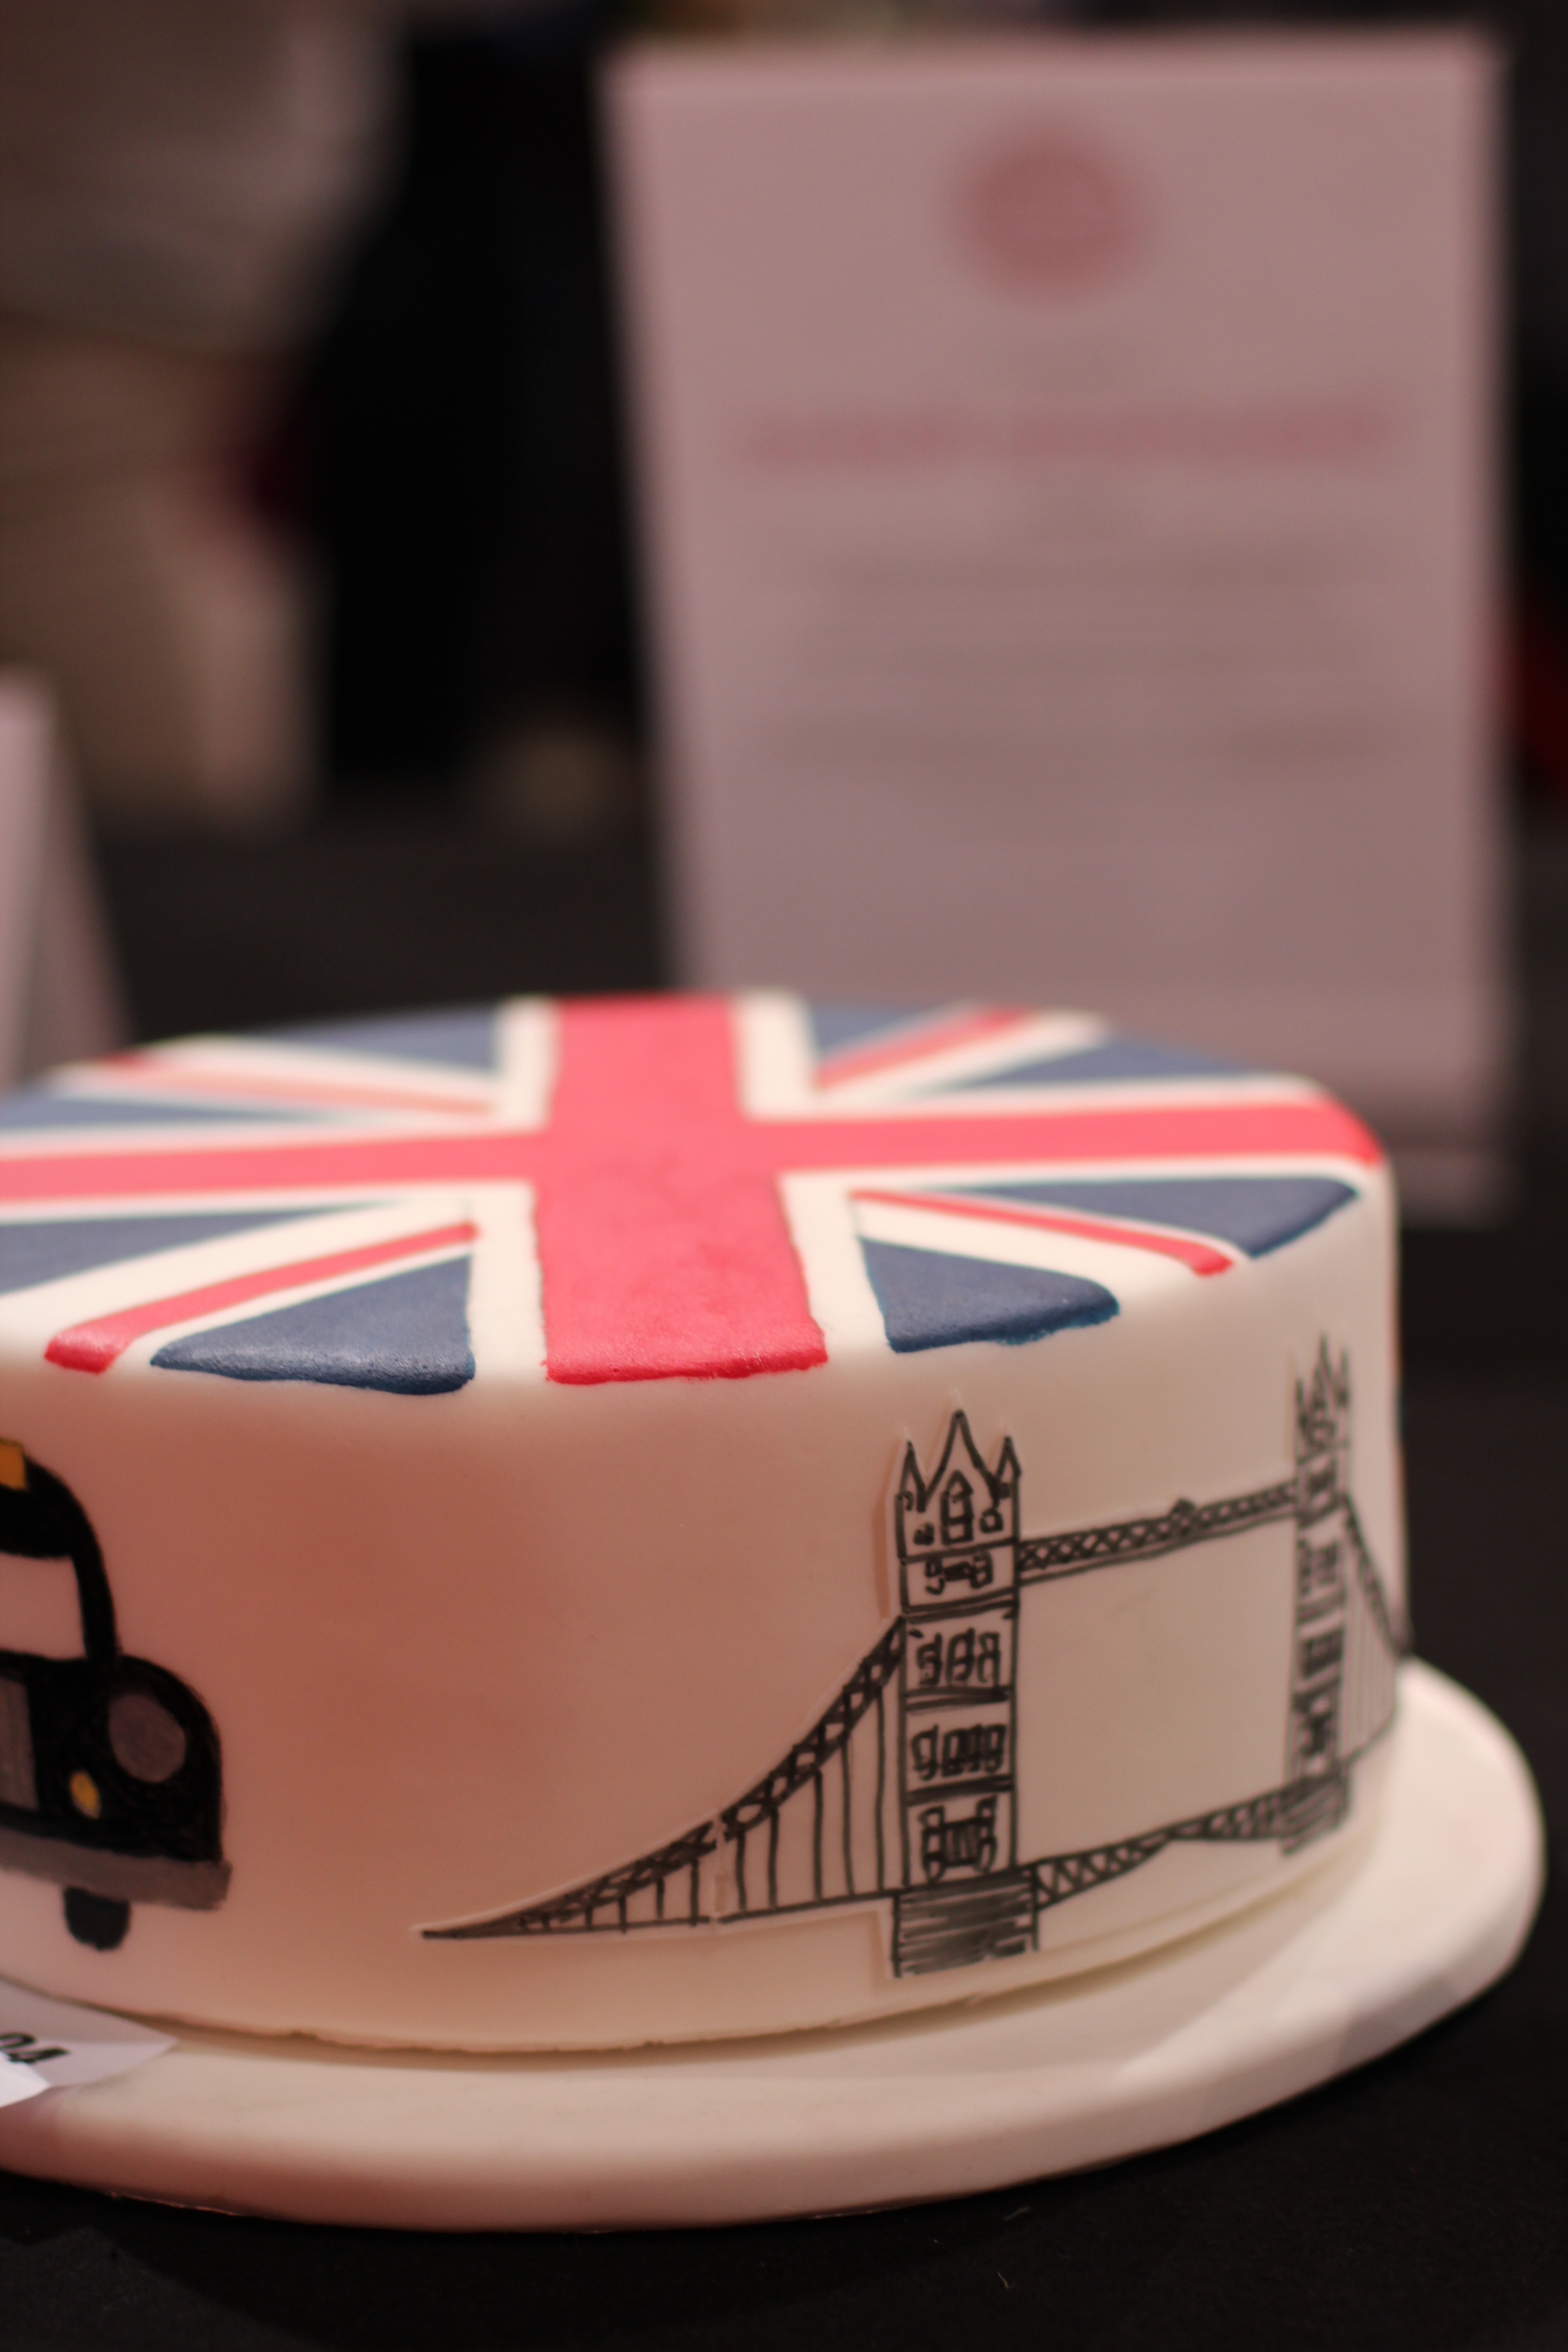 united kingdom flag white round cake